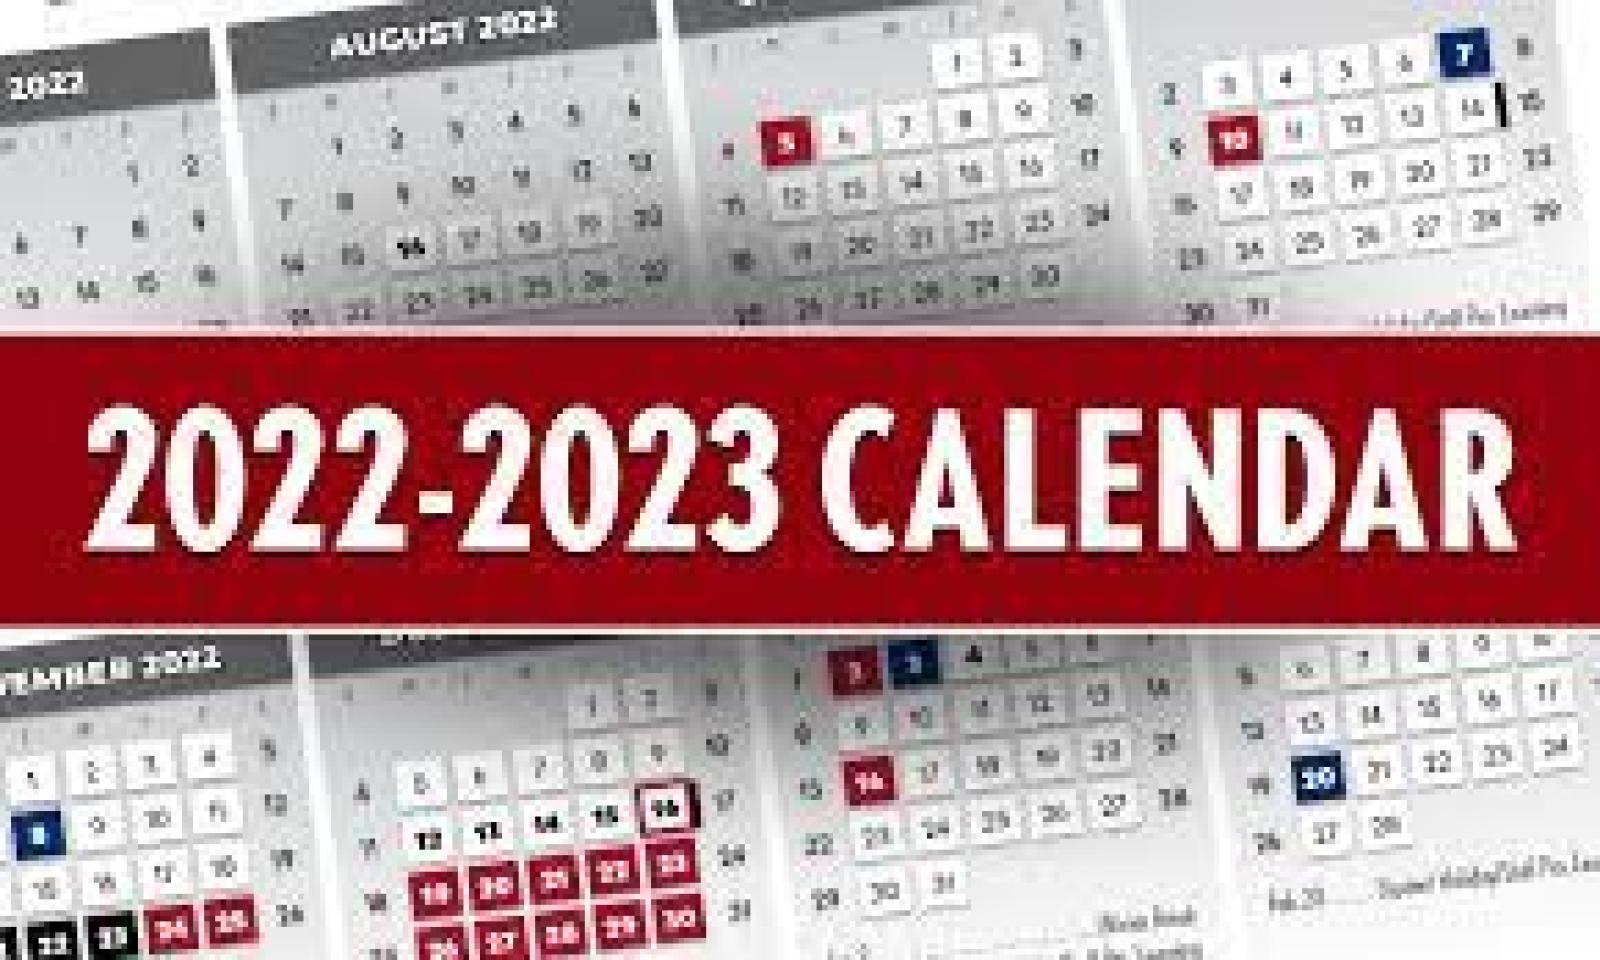 Bridge 2022-2023 School Calendar | Bridge Elementary School